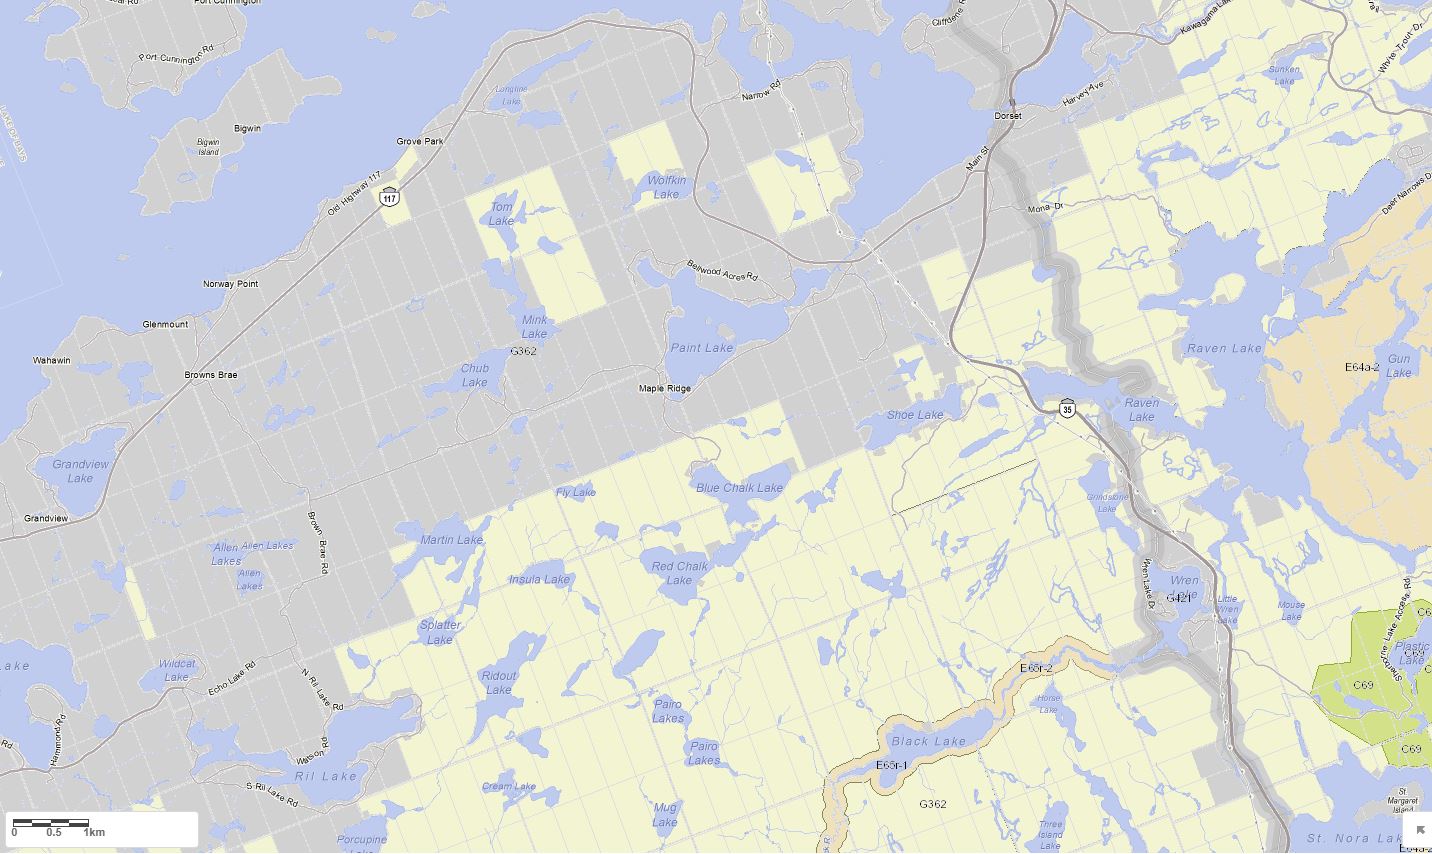 Crown Land Map of Chub Lake in Municipality of Lake of Bays and the District of Muskoka